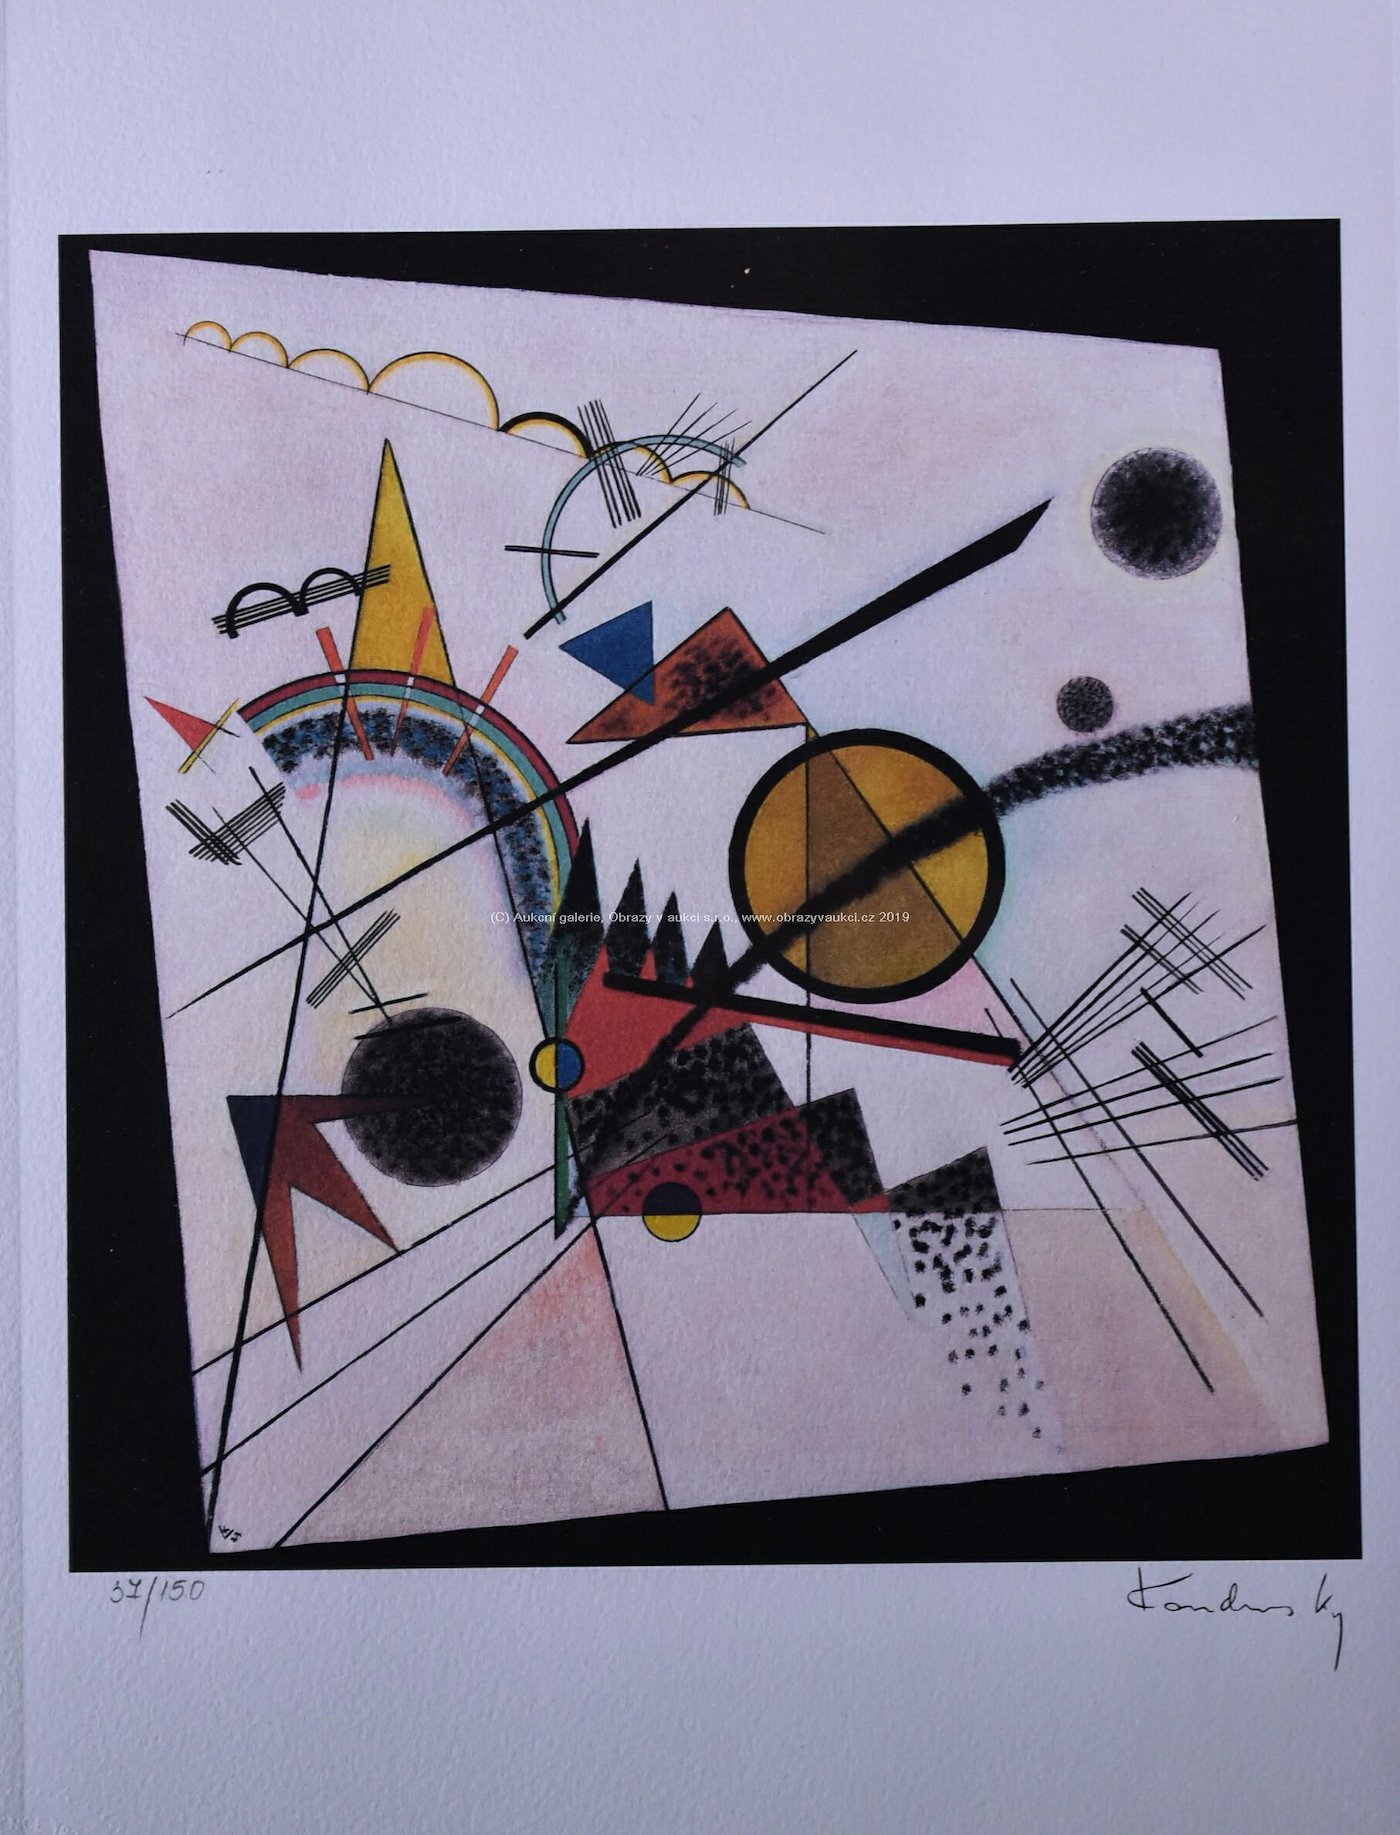 Vasilij Kandinsky - I the Black Square